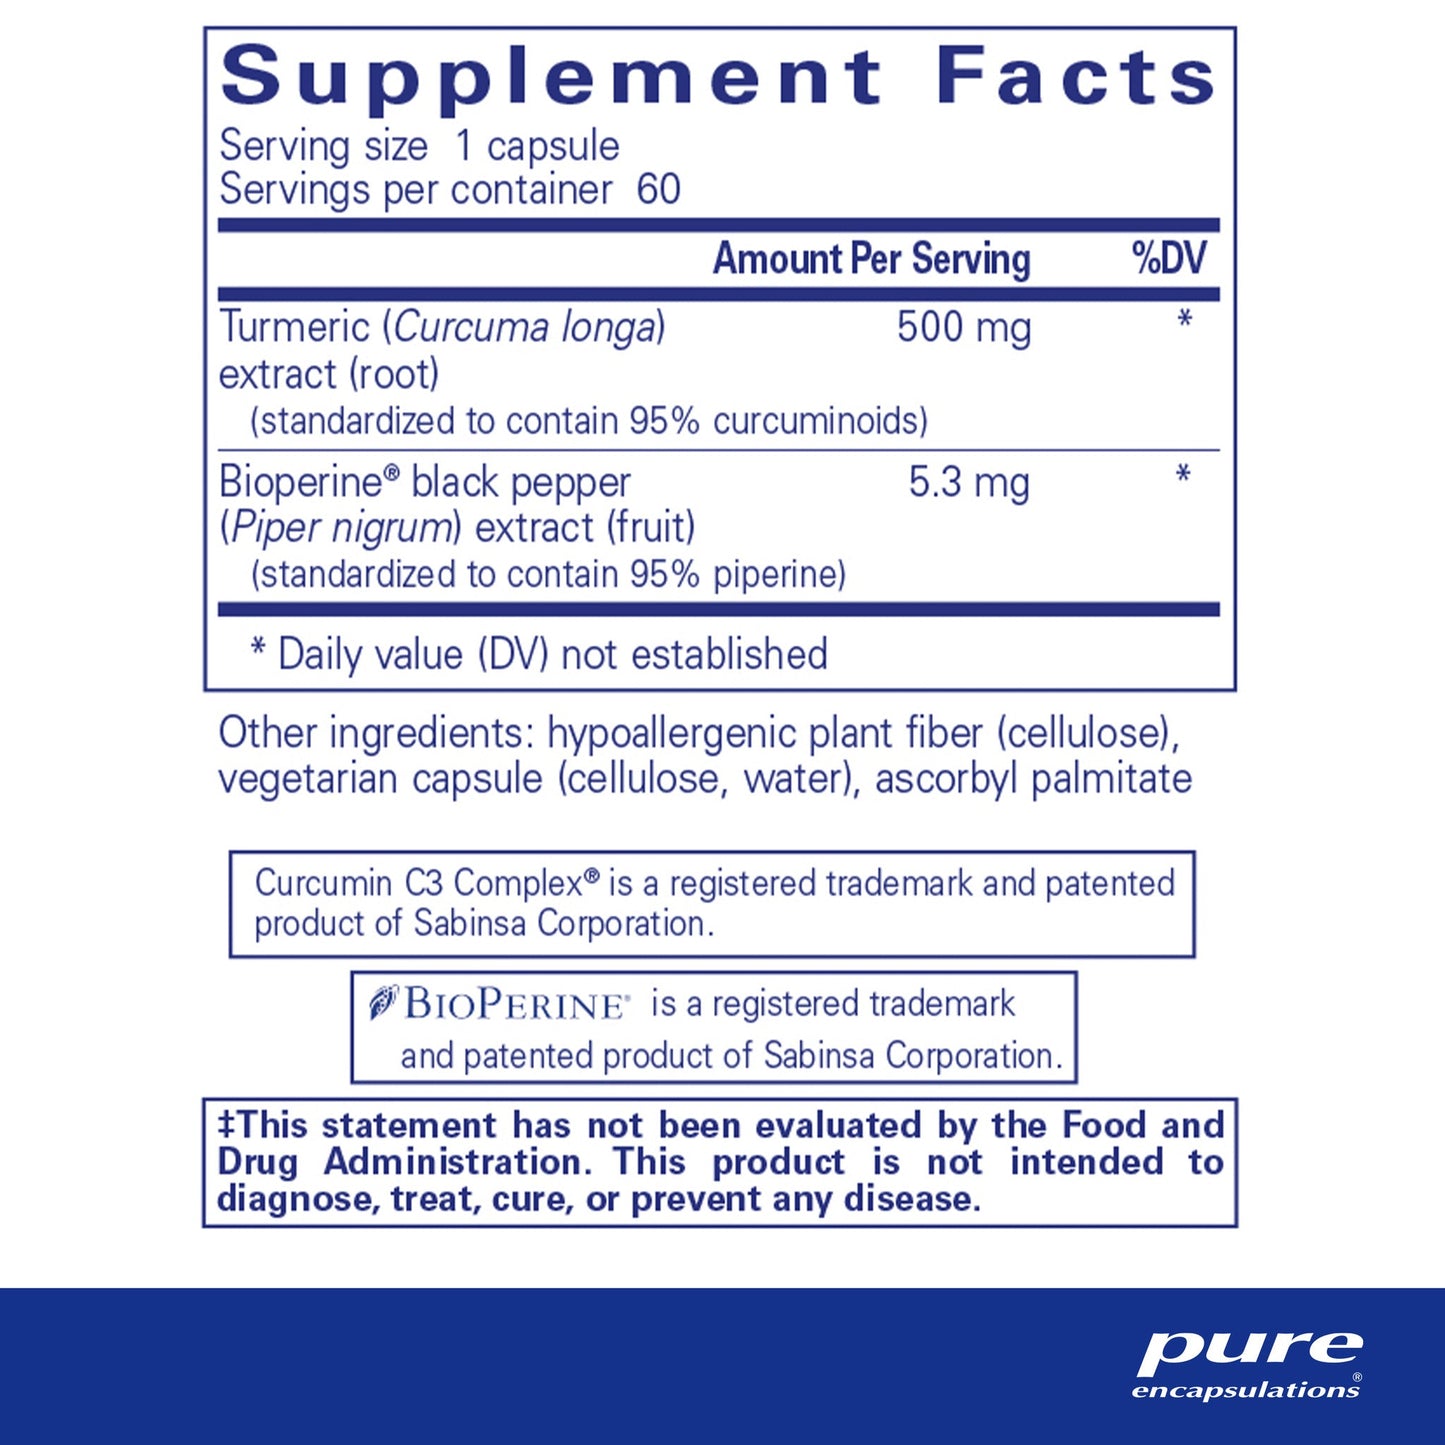 Curcumin 500 with Bioperine - Pure Encapsulations